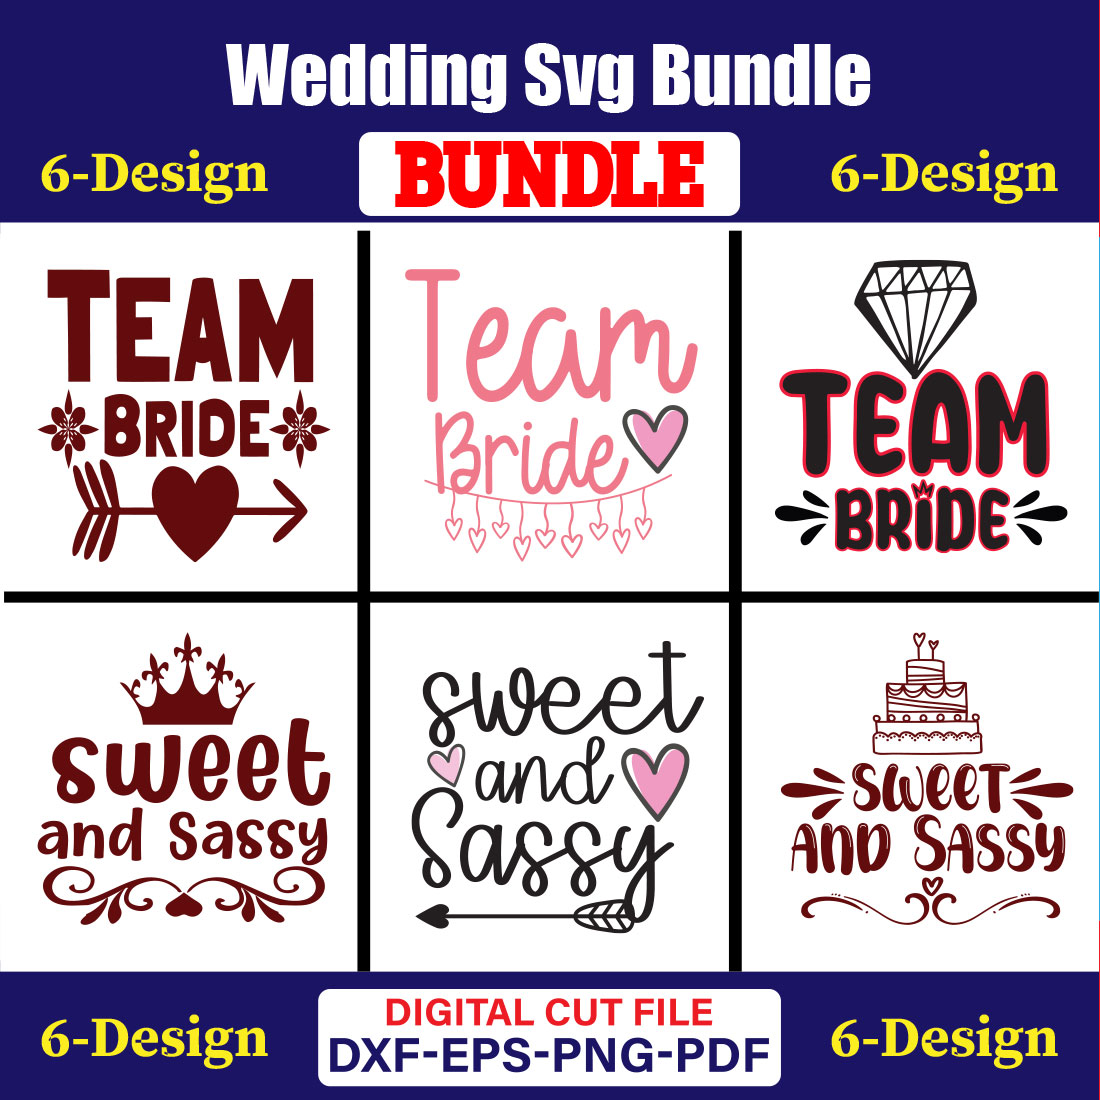 Wedding T-shirt Design Bundle Vol-37 cover image.